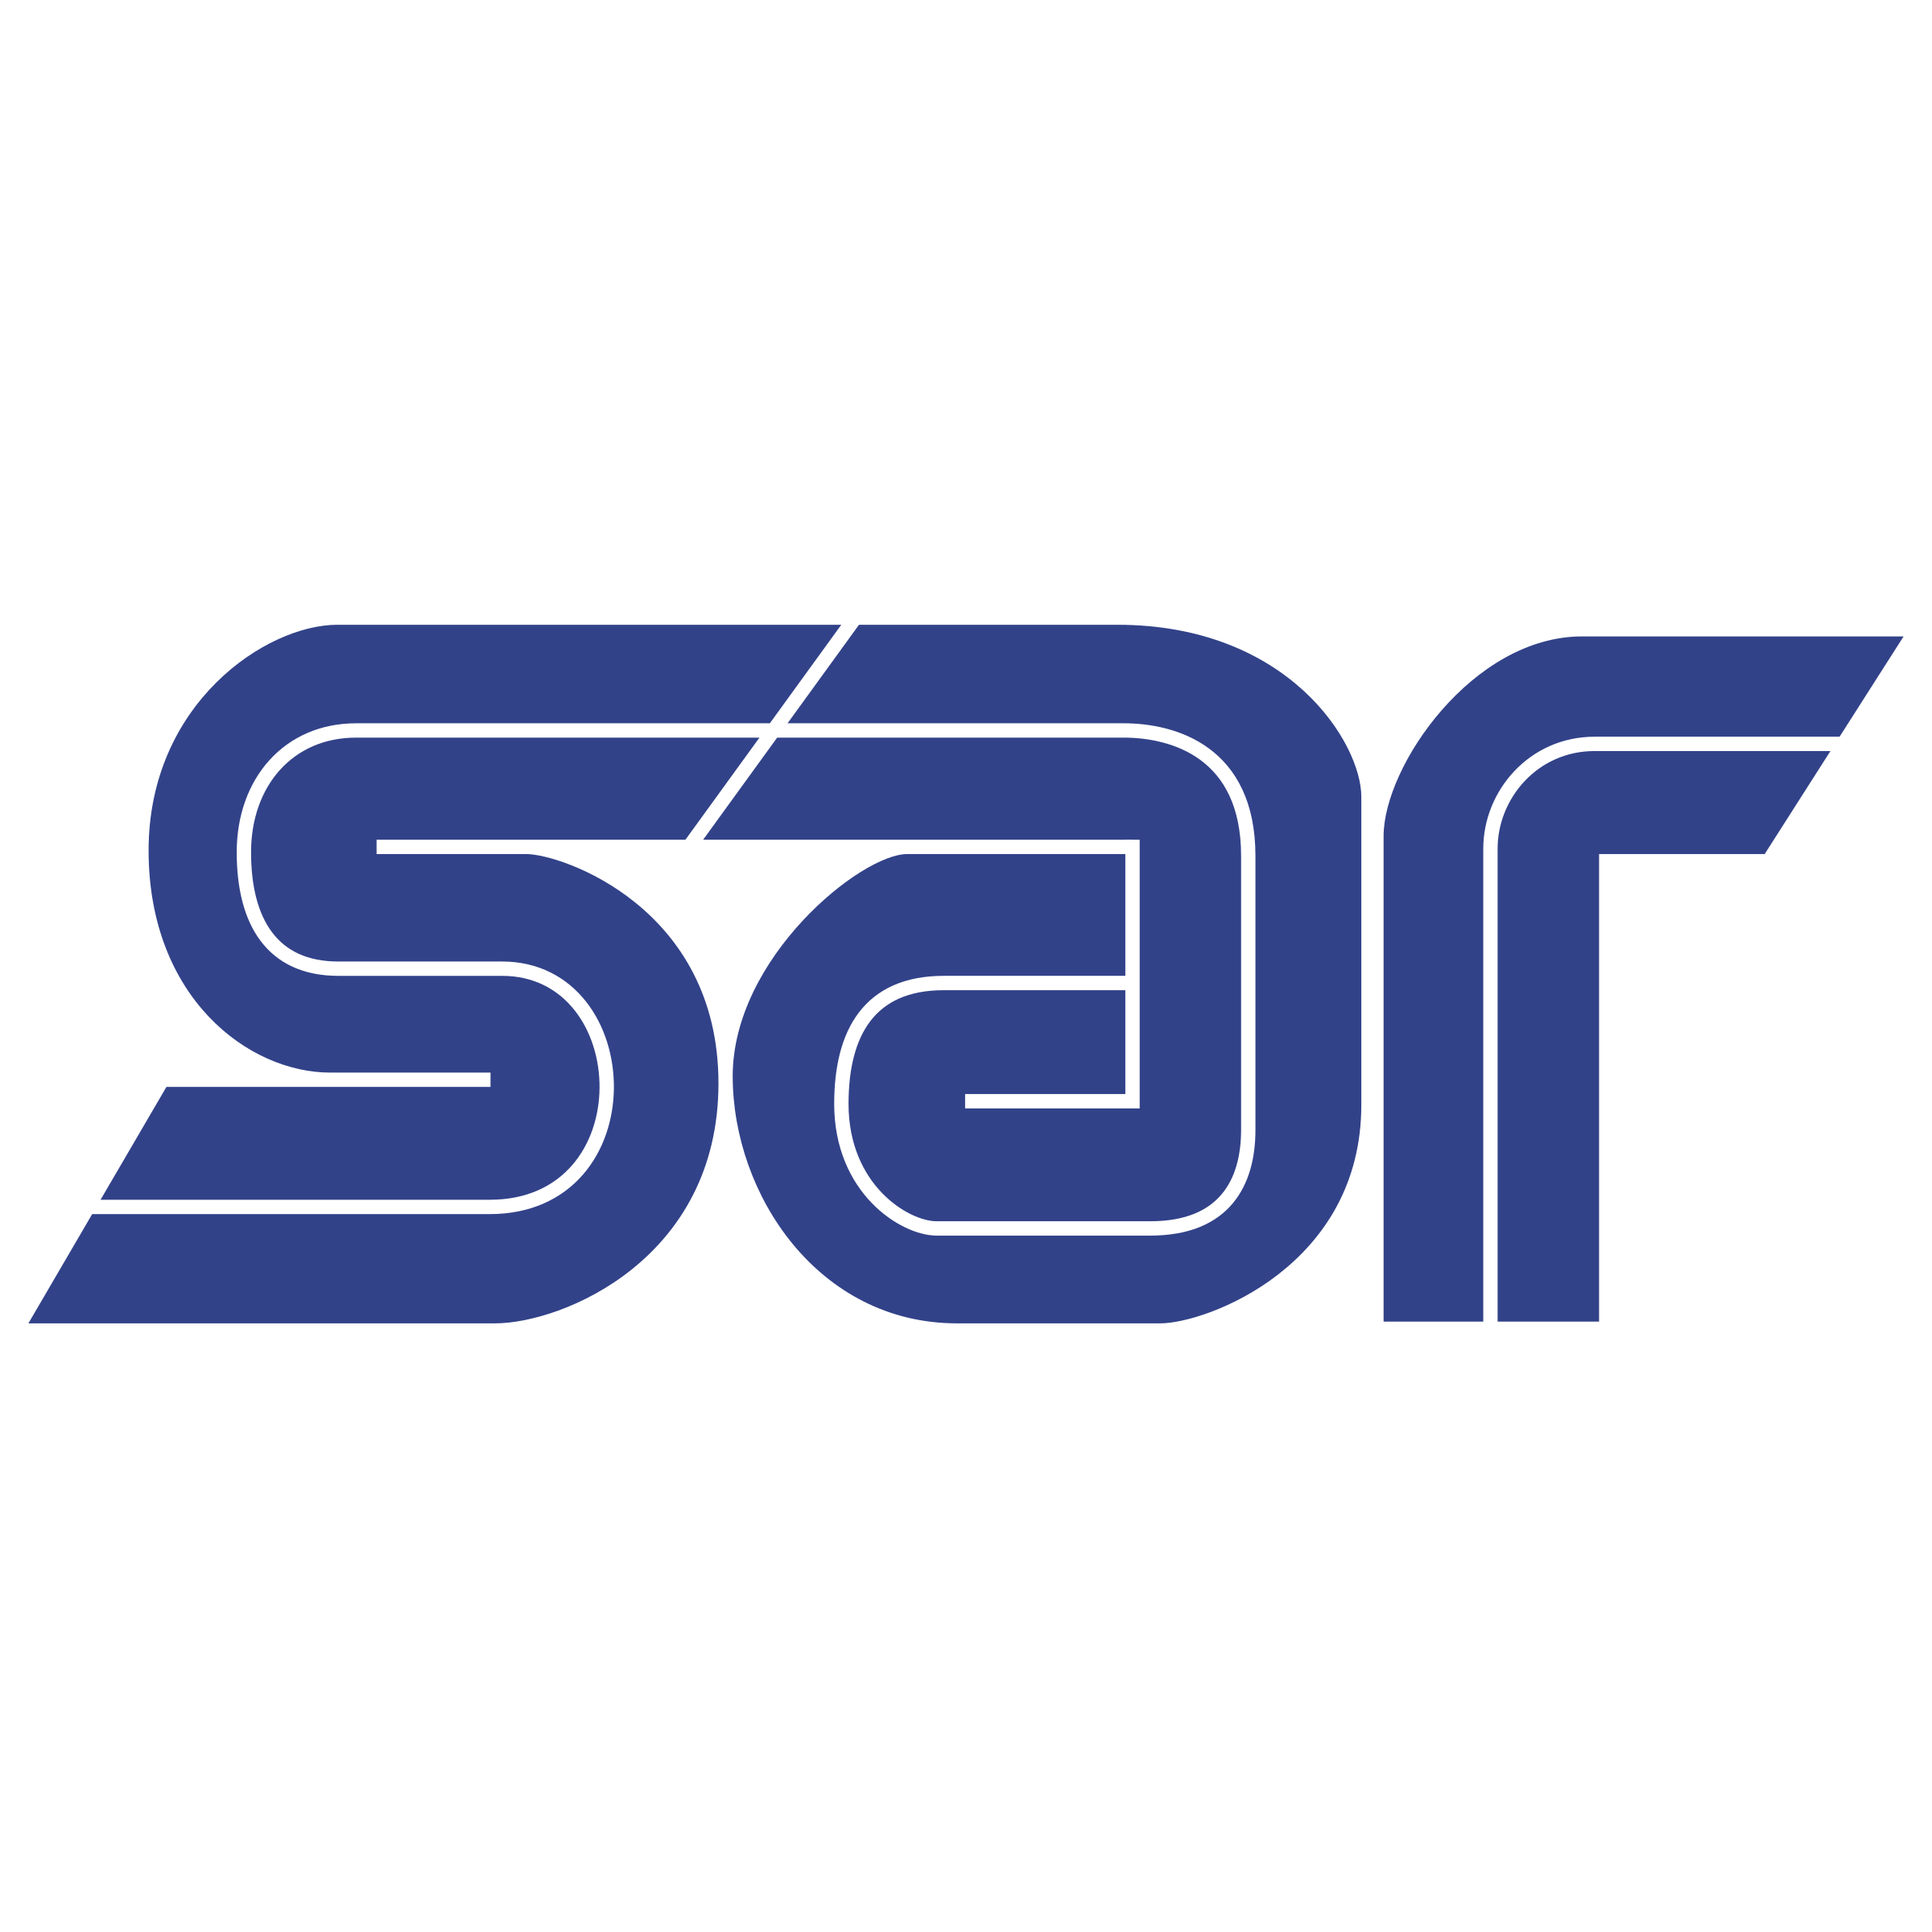 SAR Logo - SAR Logo PNG Transparent & SVG Vector - Freebie Supply